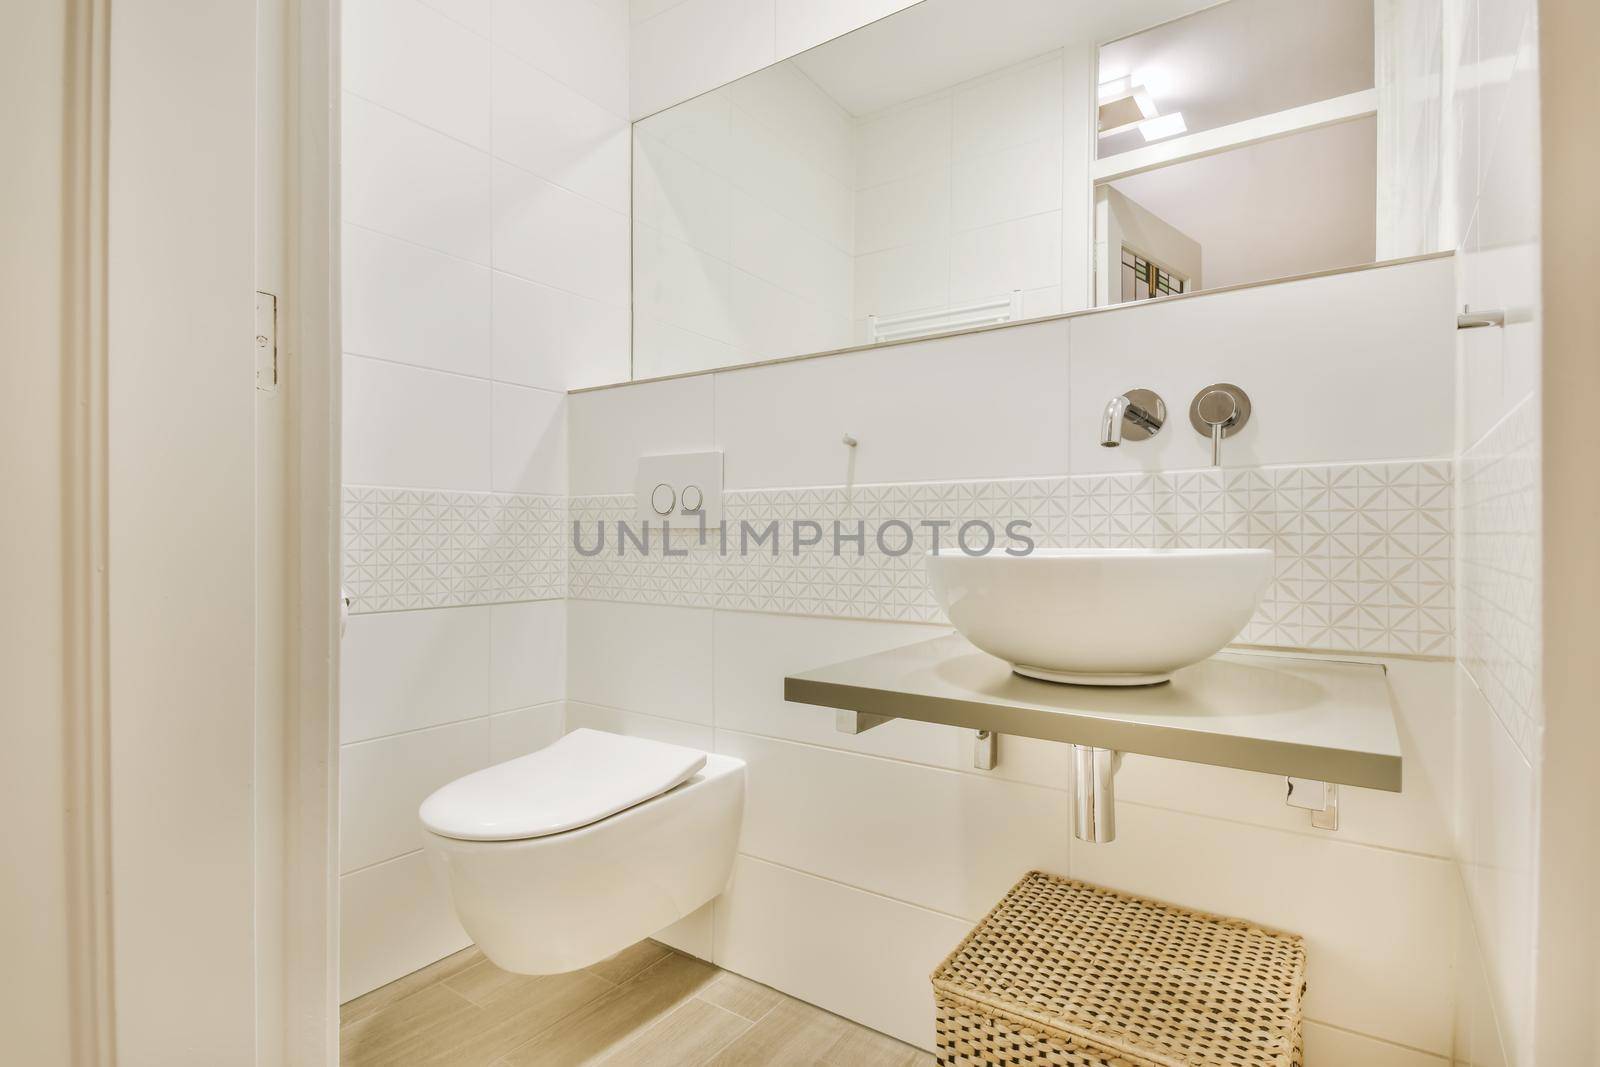 Elegant restroom design by casamedia